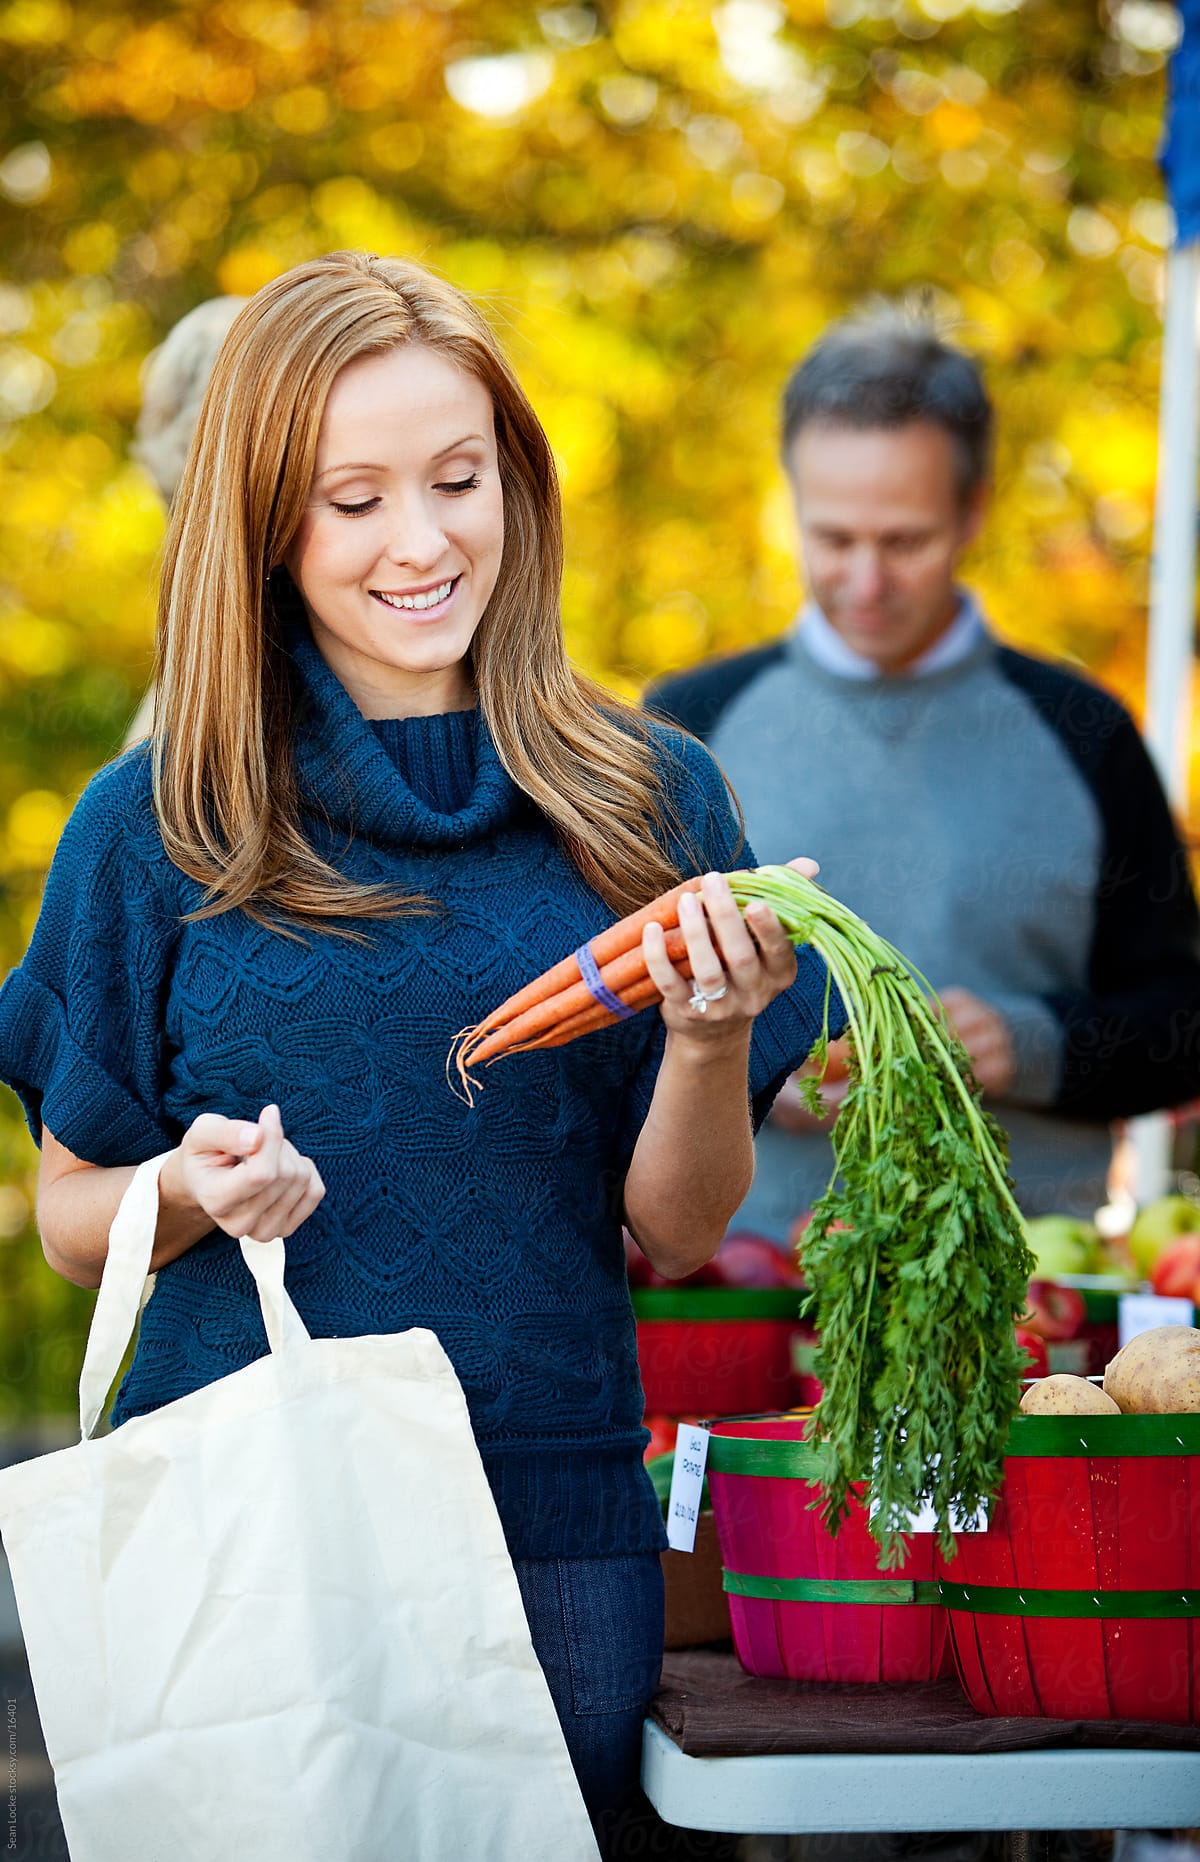 Farmer's Market: Deciding on Buying Carrots